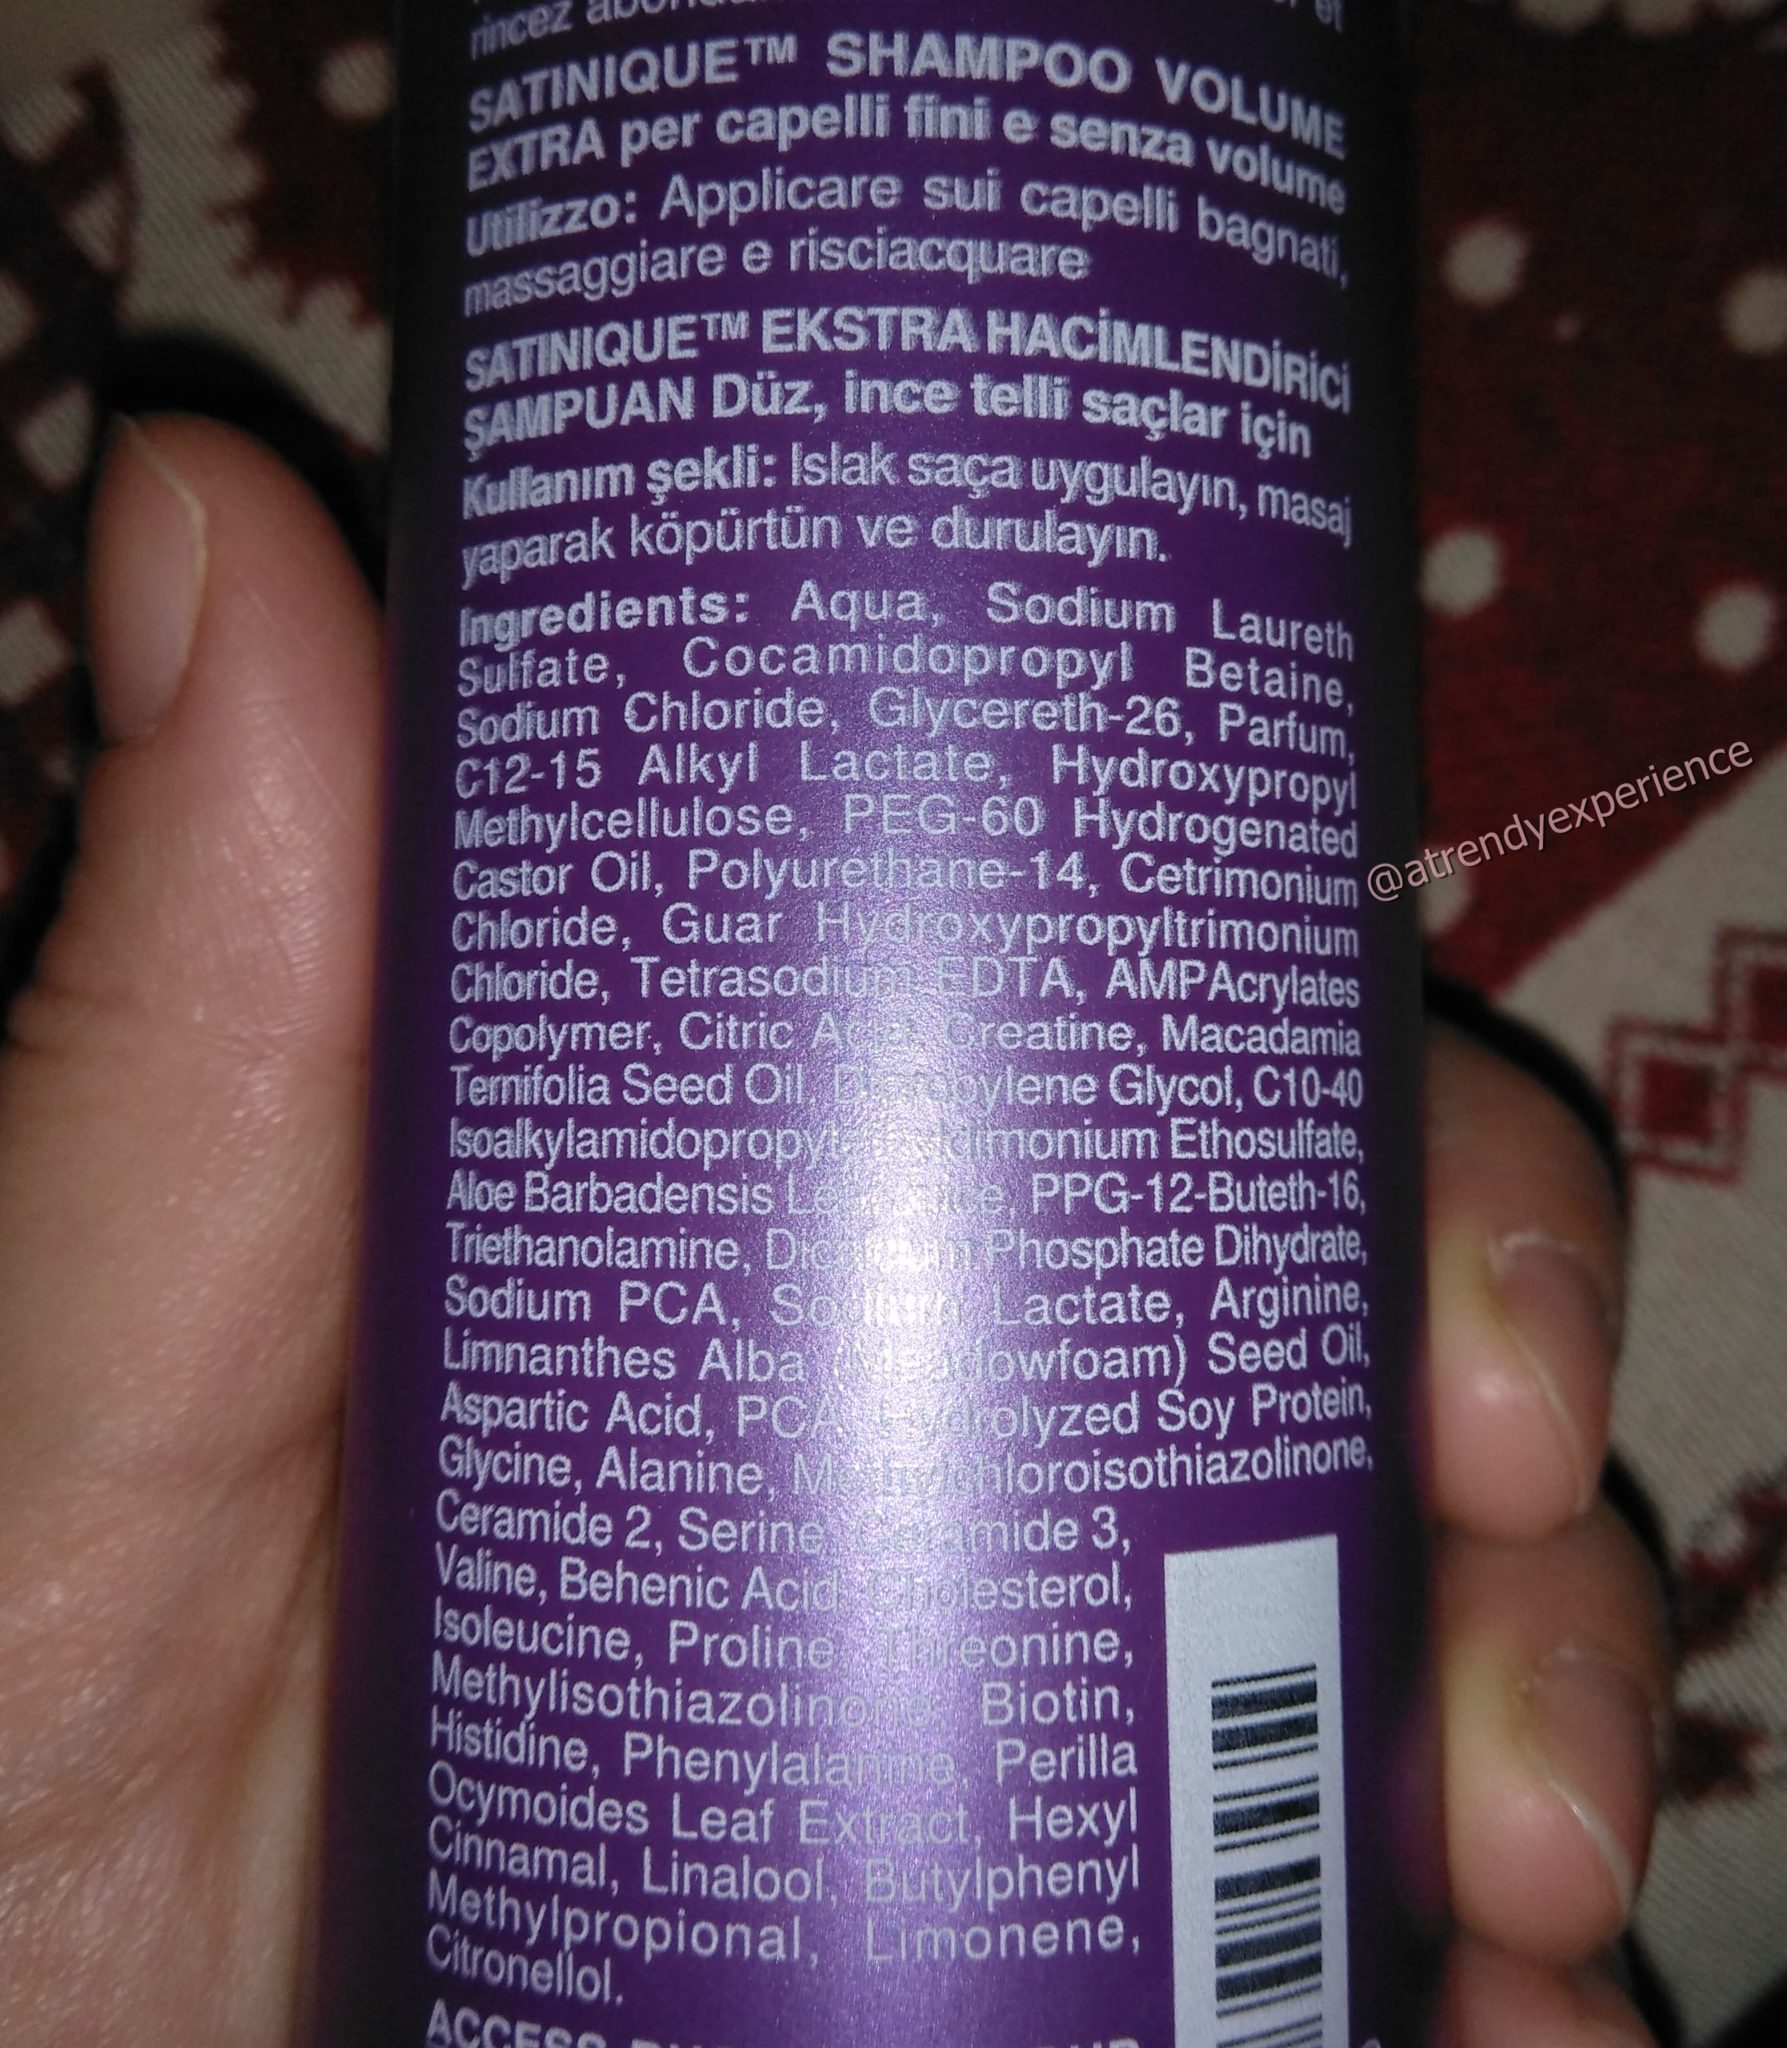 Amway Shampoo Extravolume SATINIQUE™ inci ingredienti 